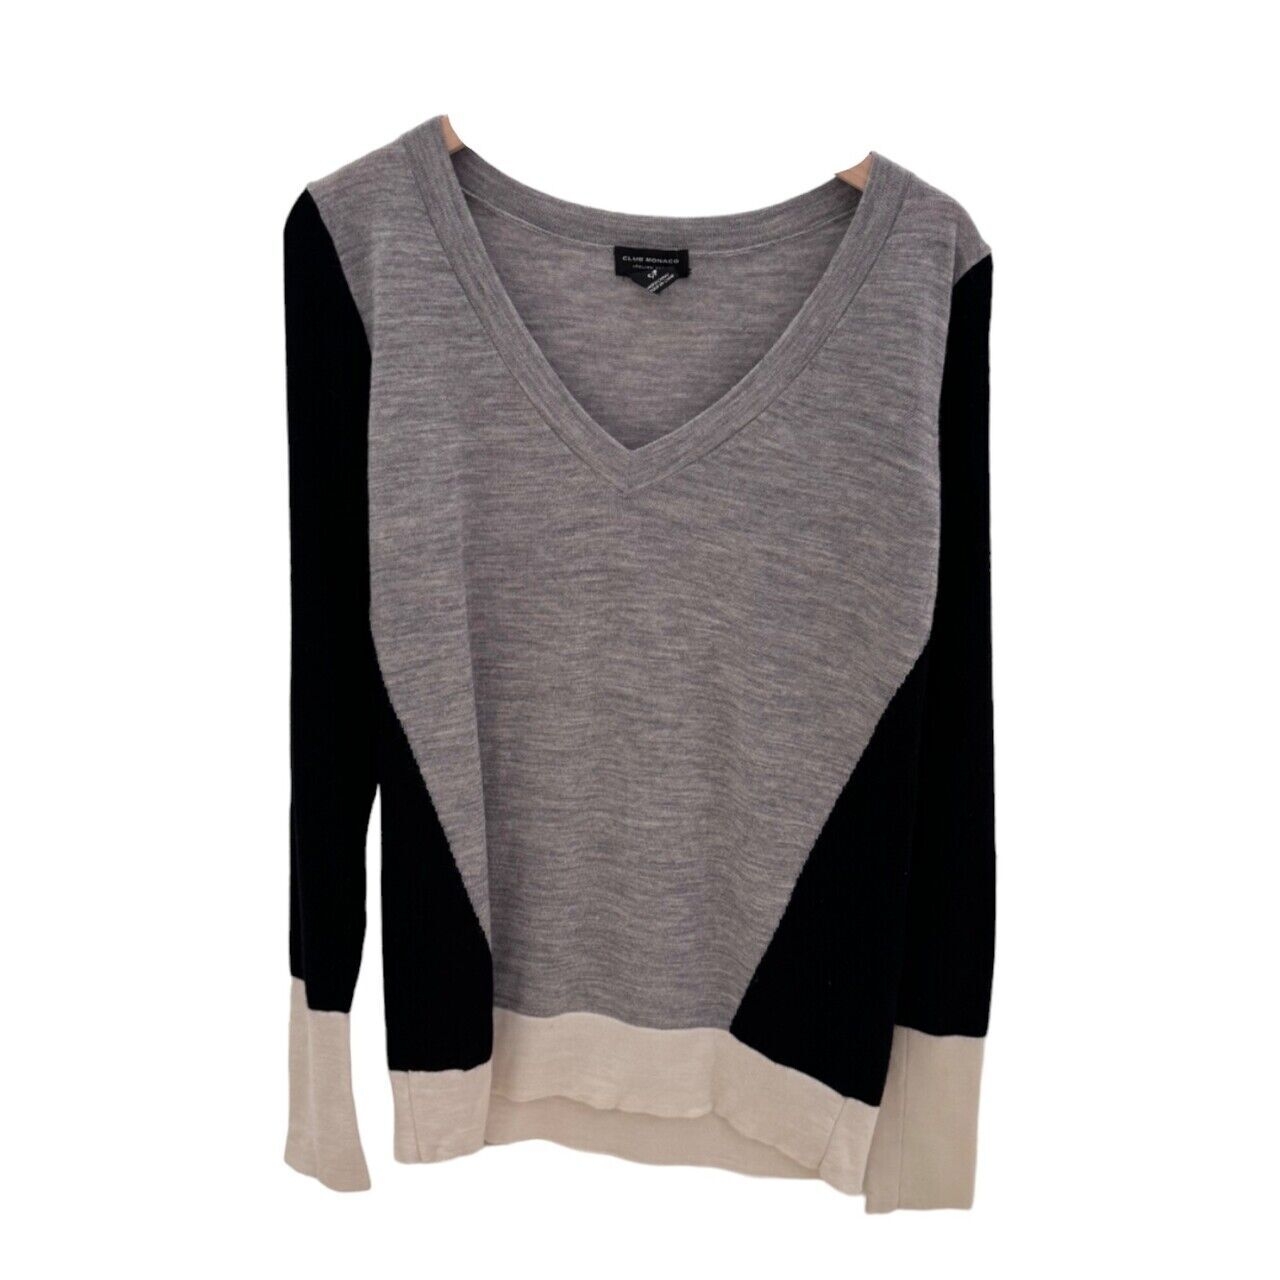 Club Monaco Black & Grey Sweater